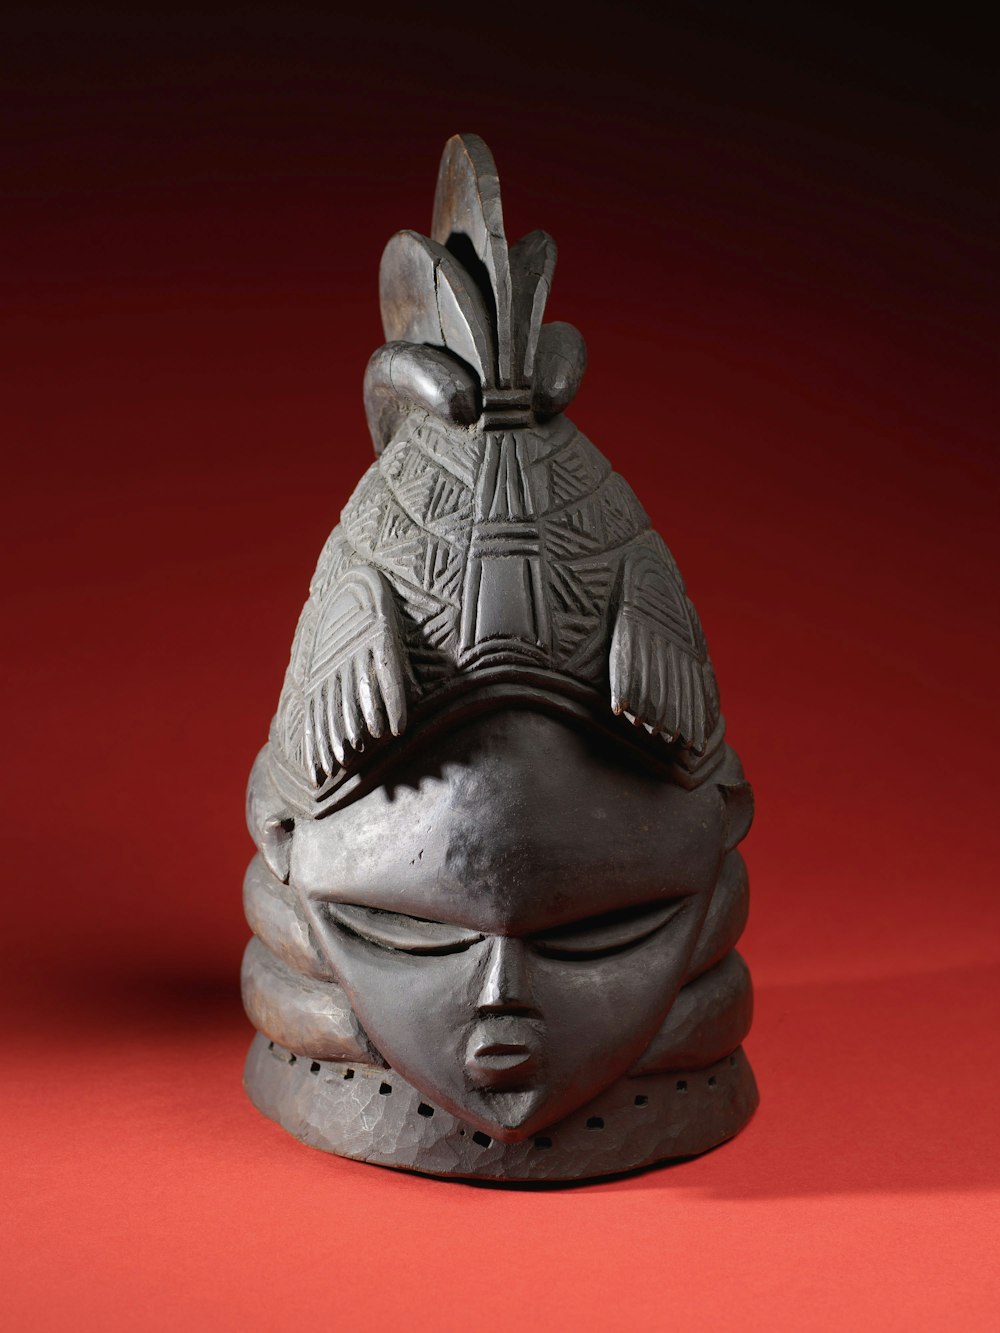 a statue of a woman's head wearing a headdress